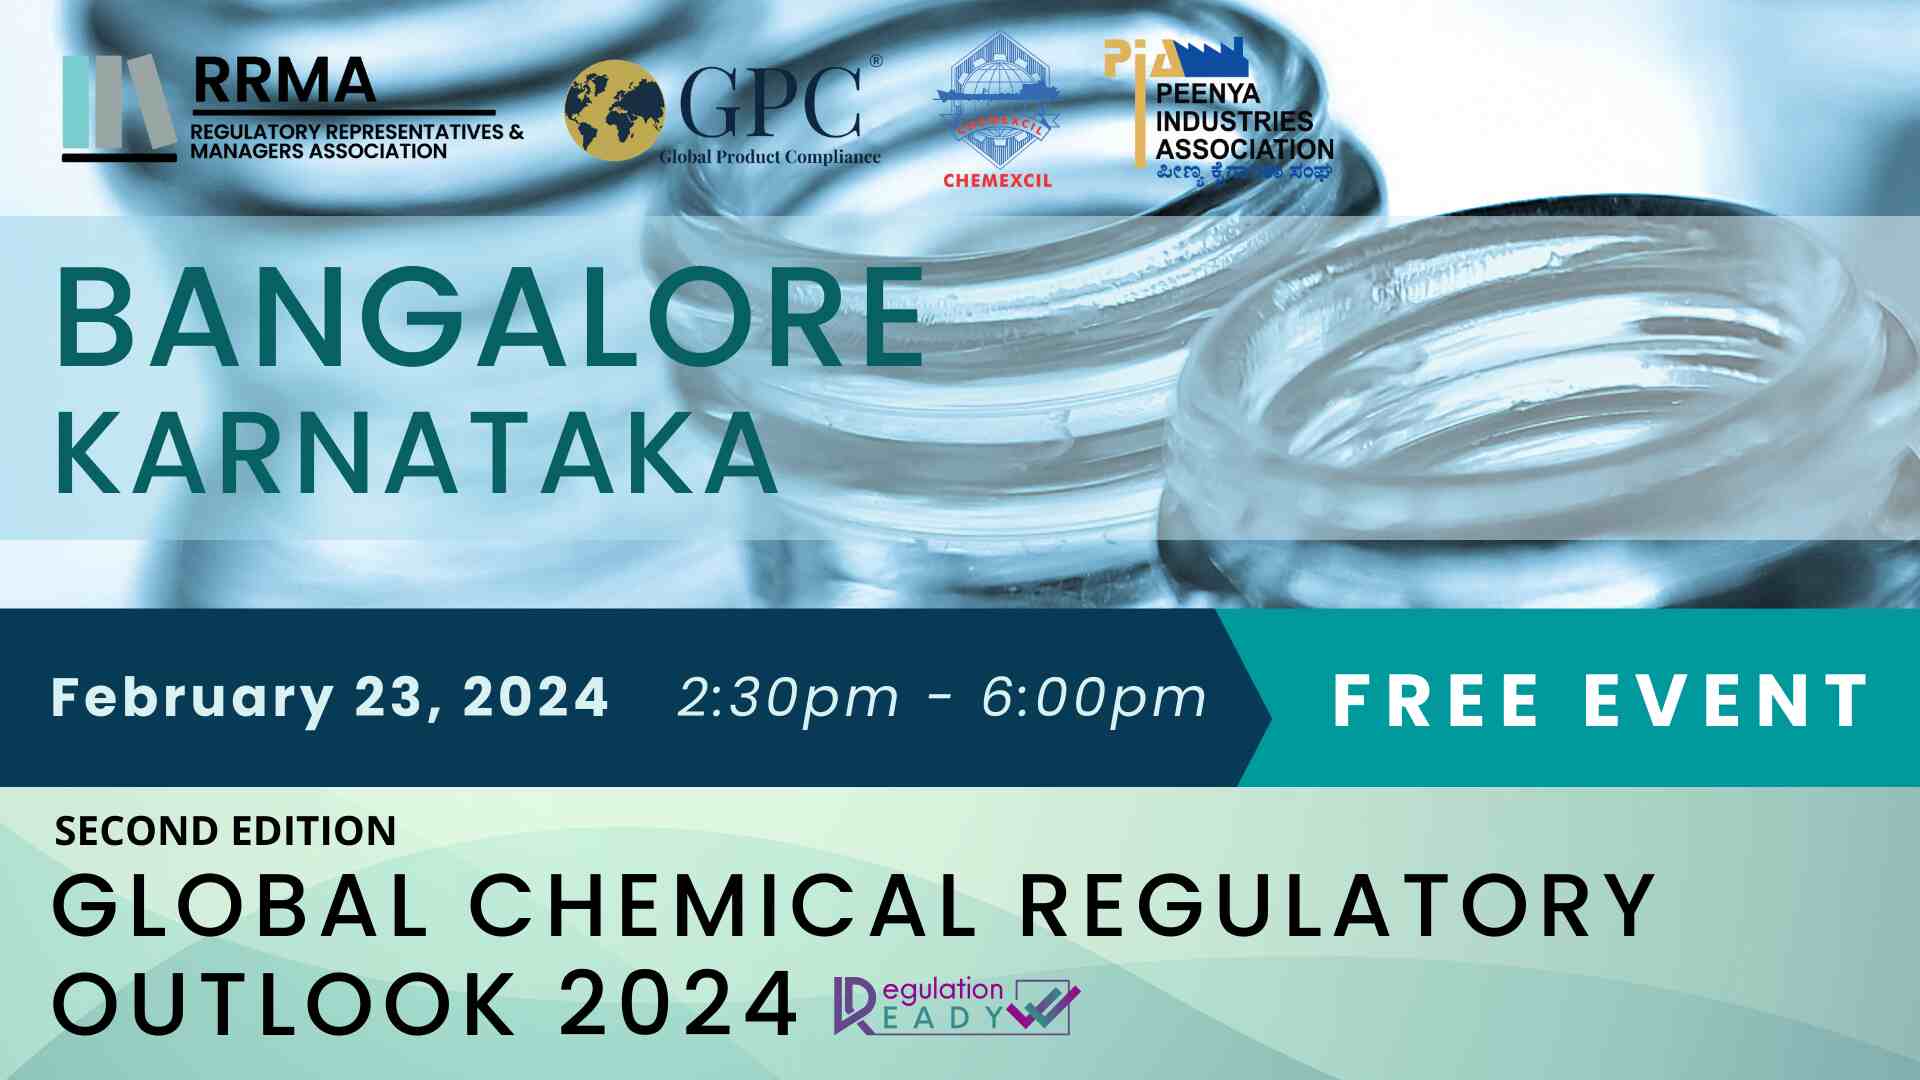 Global Chemicals Regulatory Outlook 2024 in Bangalore